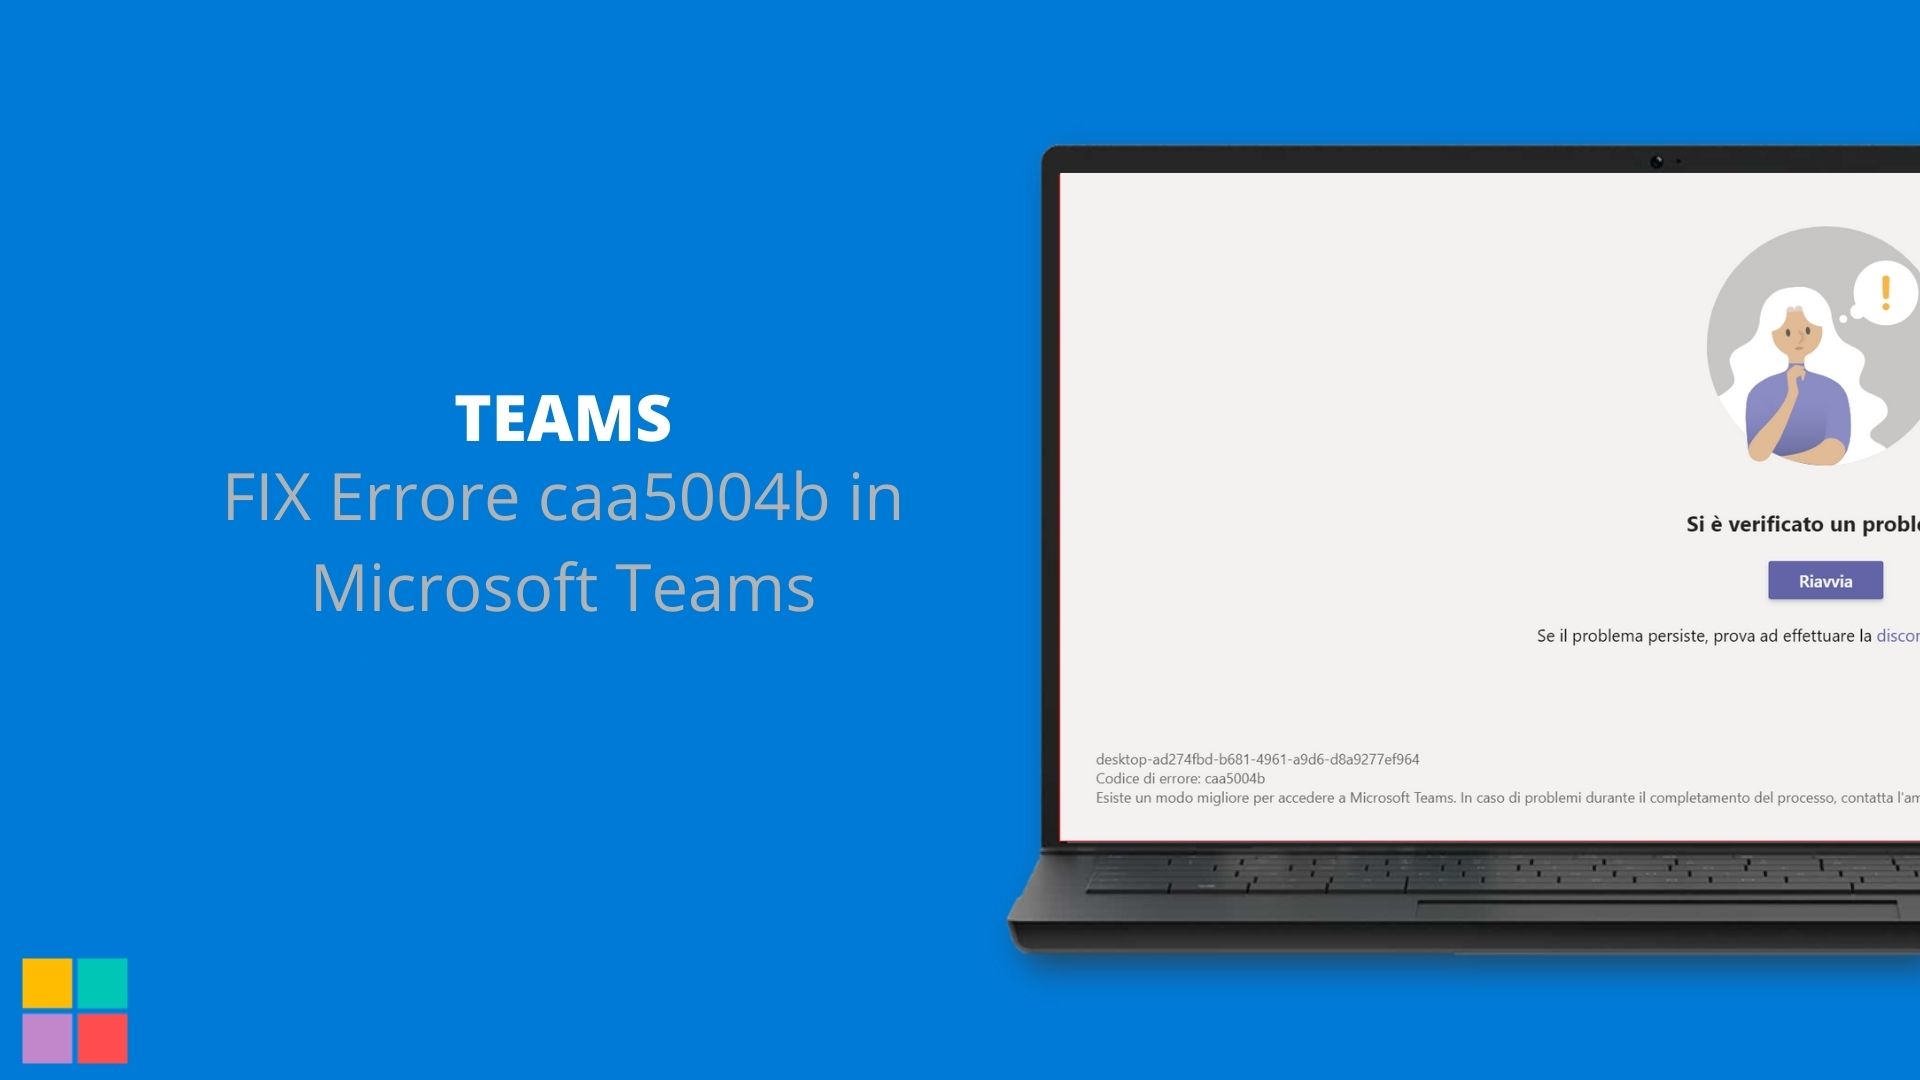 FIX Errore caa5004b in Microsoft Teams